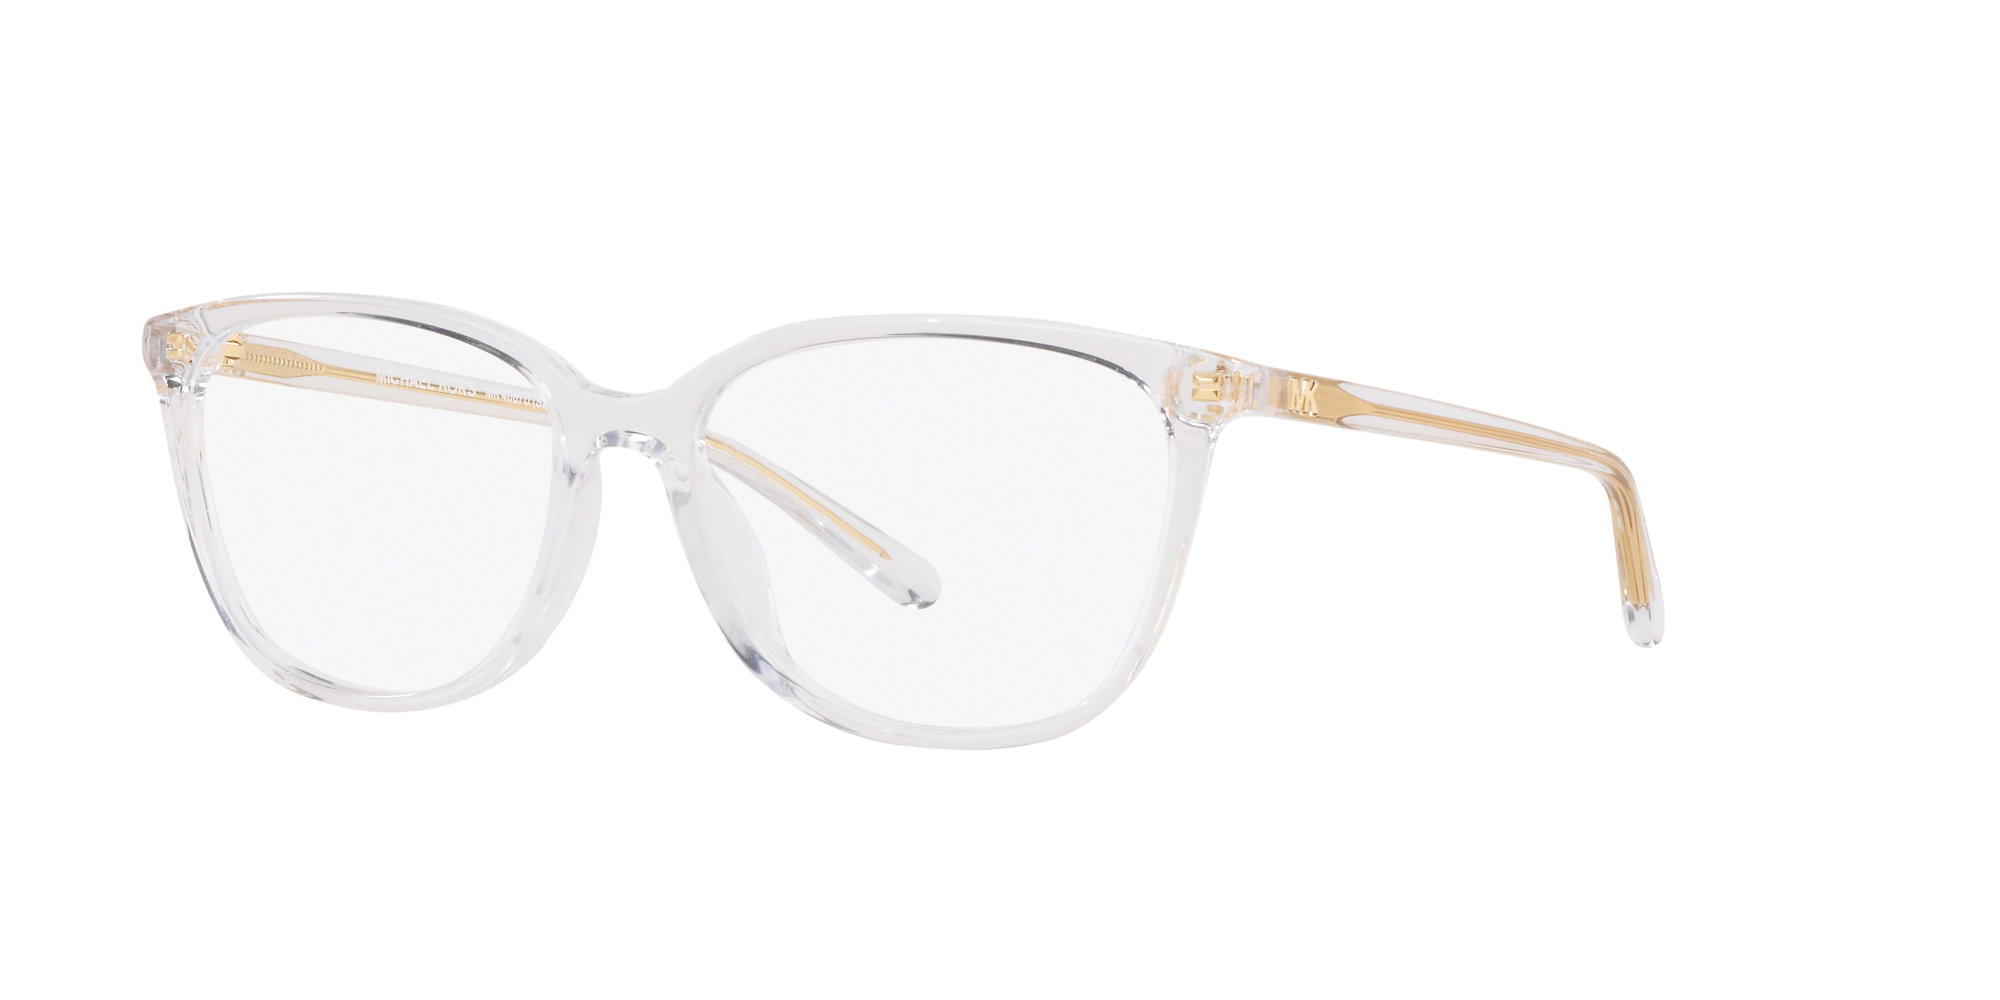 Michael Kors Clear Eyeglass Frames for sale  eBay